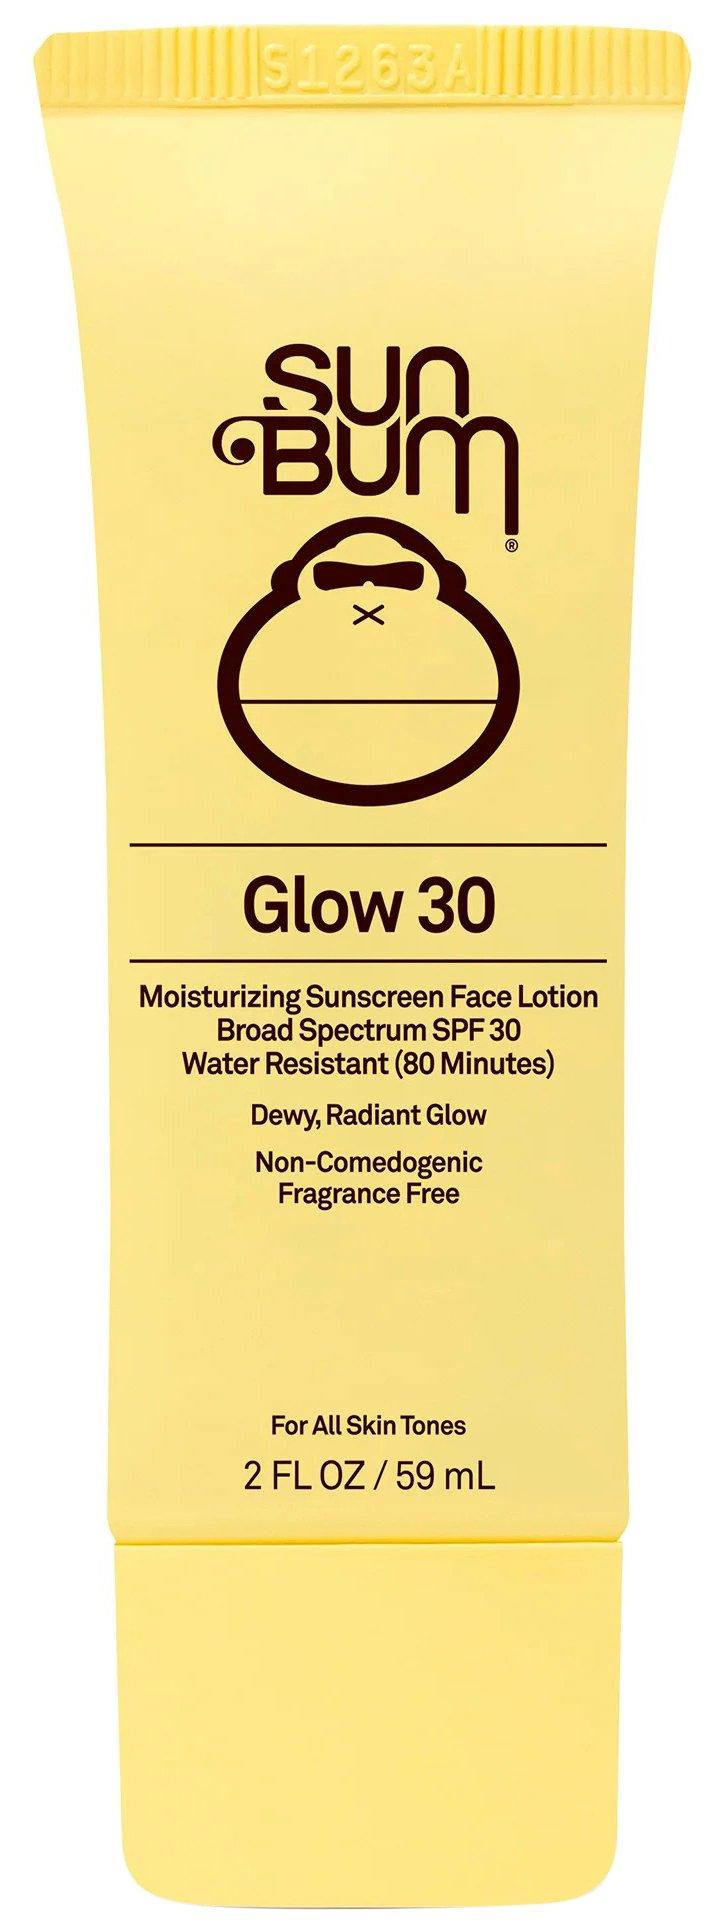 Glow 30 Moisturizing Sunscreen Face Lotion